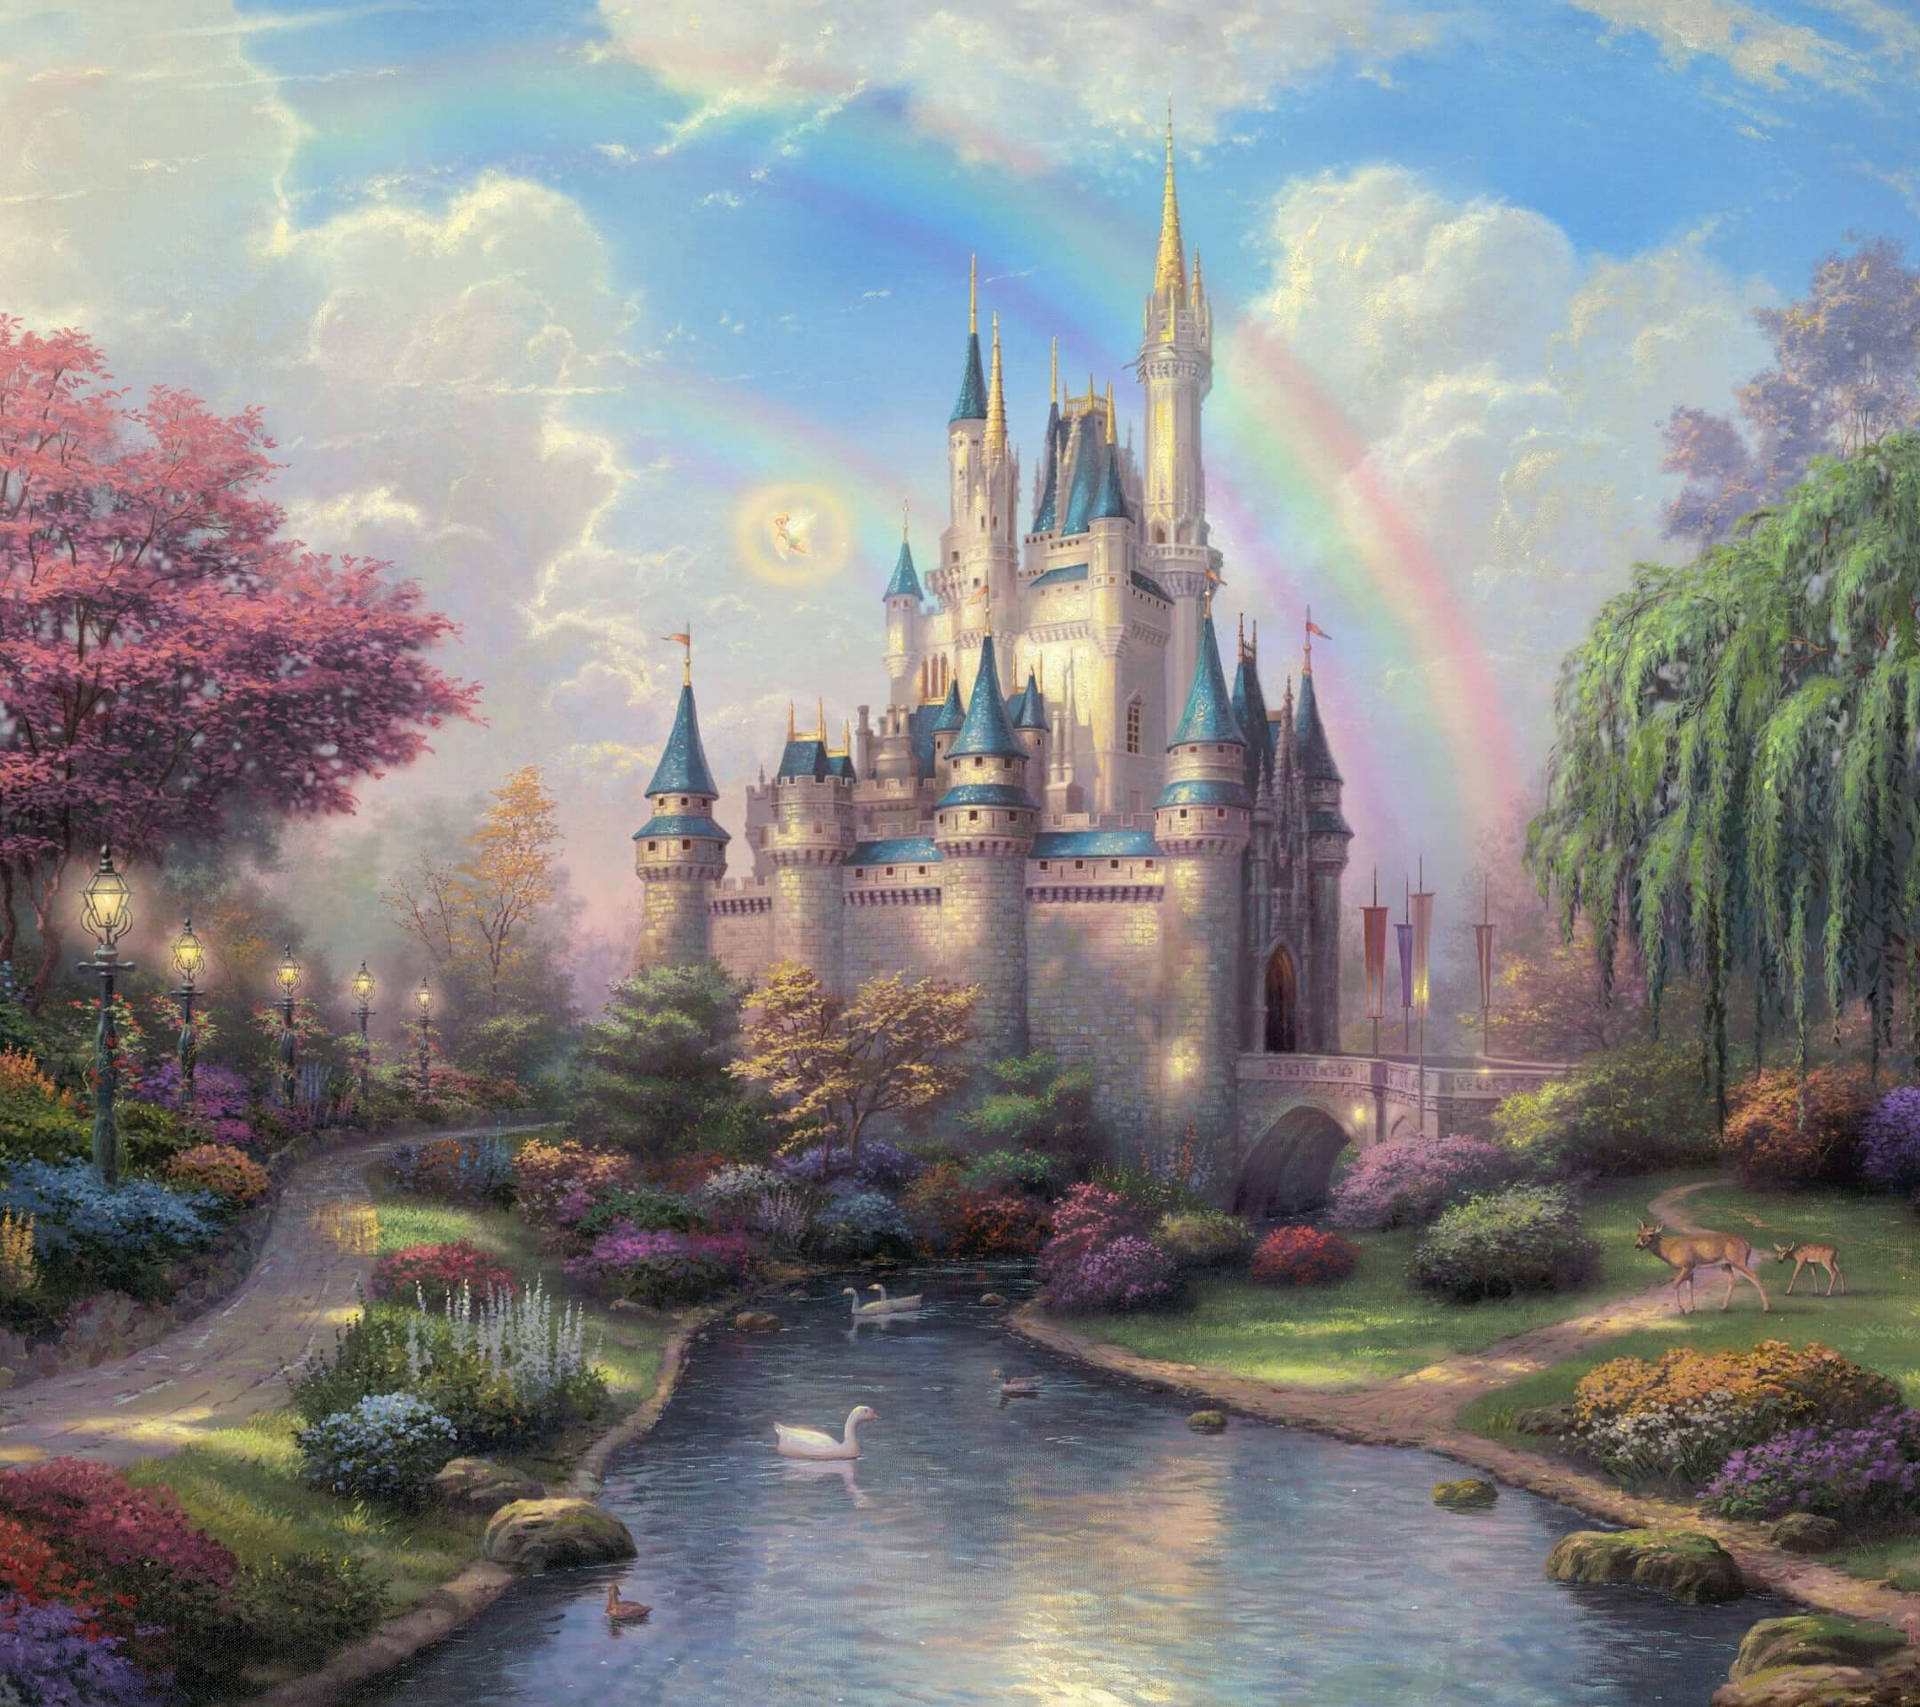 Magical Castle Art Image Background